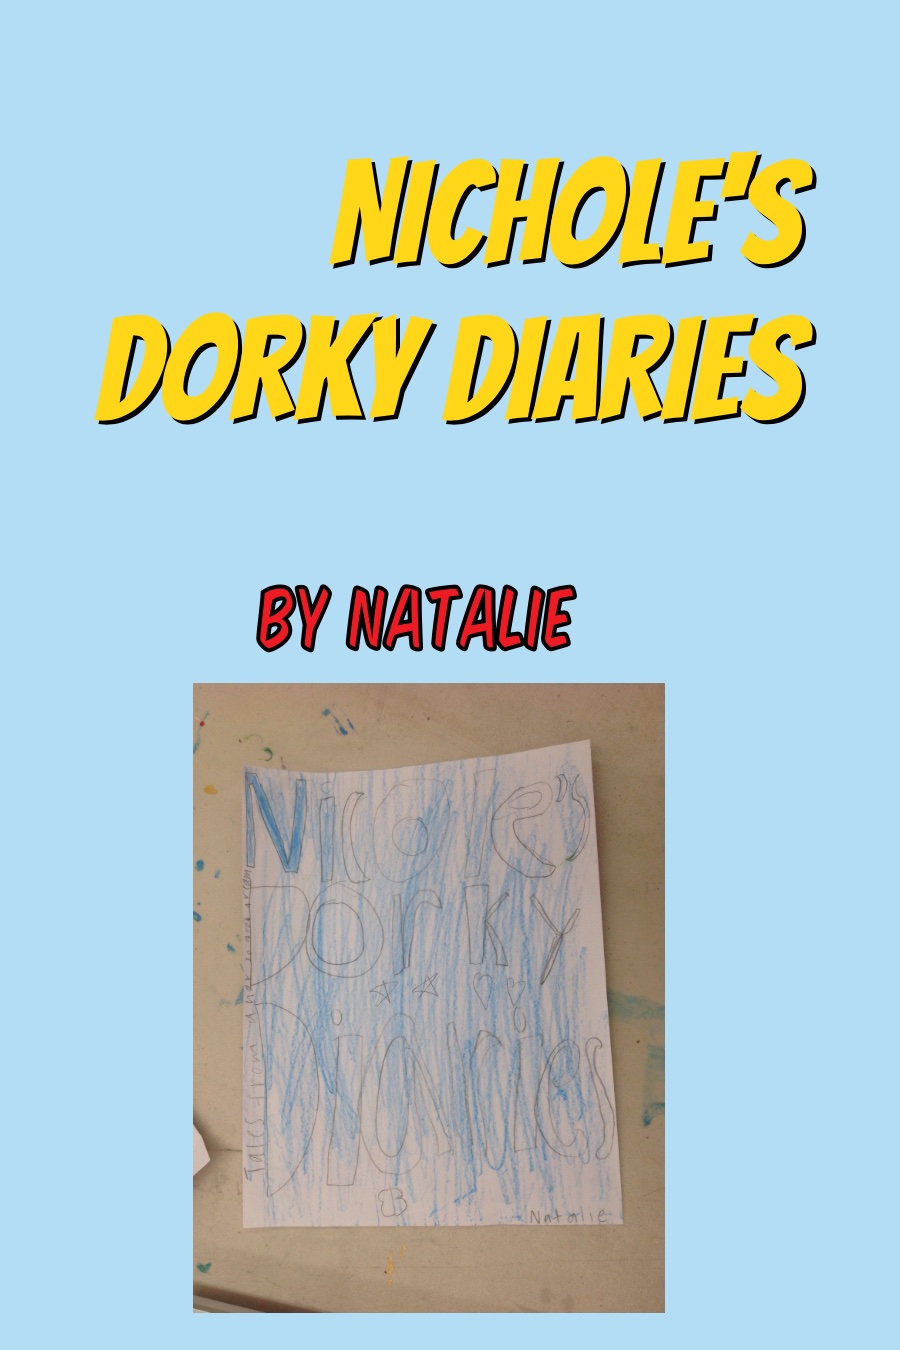 Nichole’s Dork Diaries by Natalie E